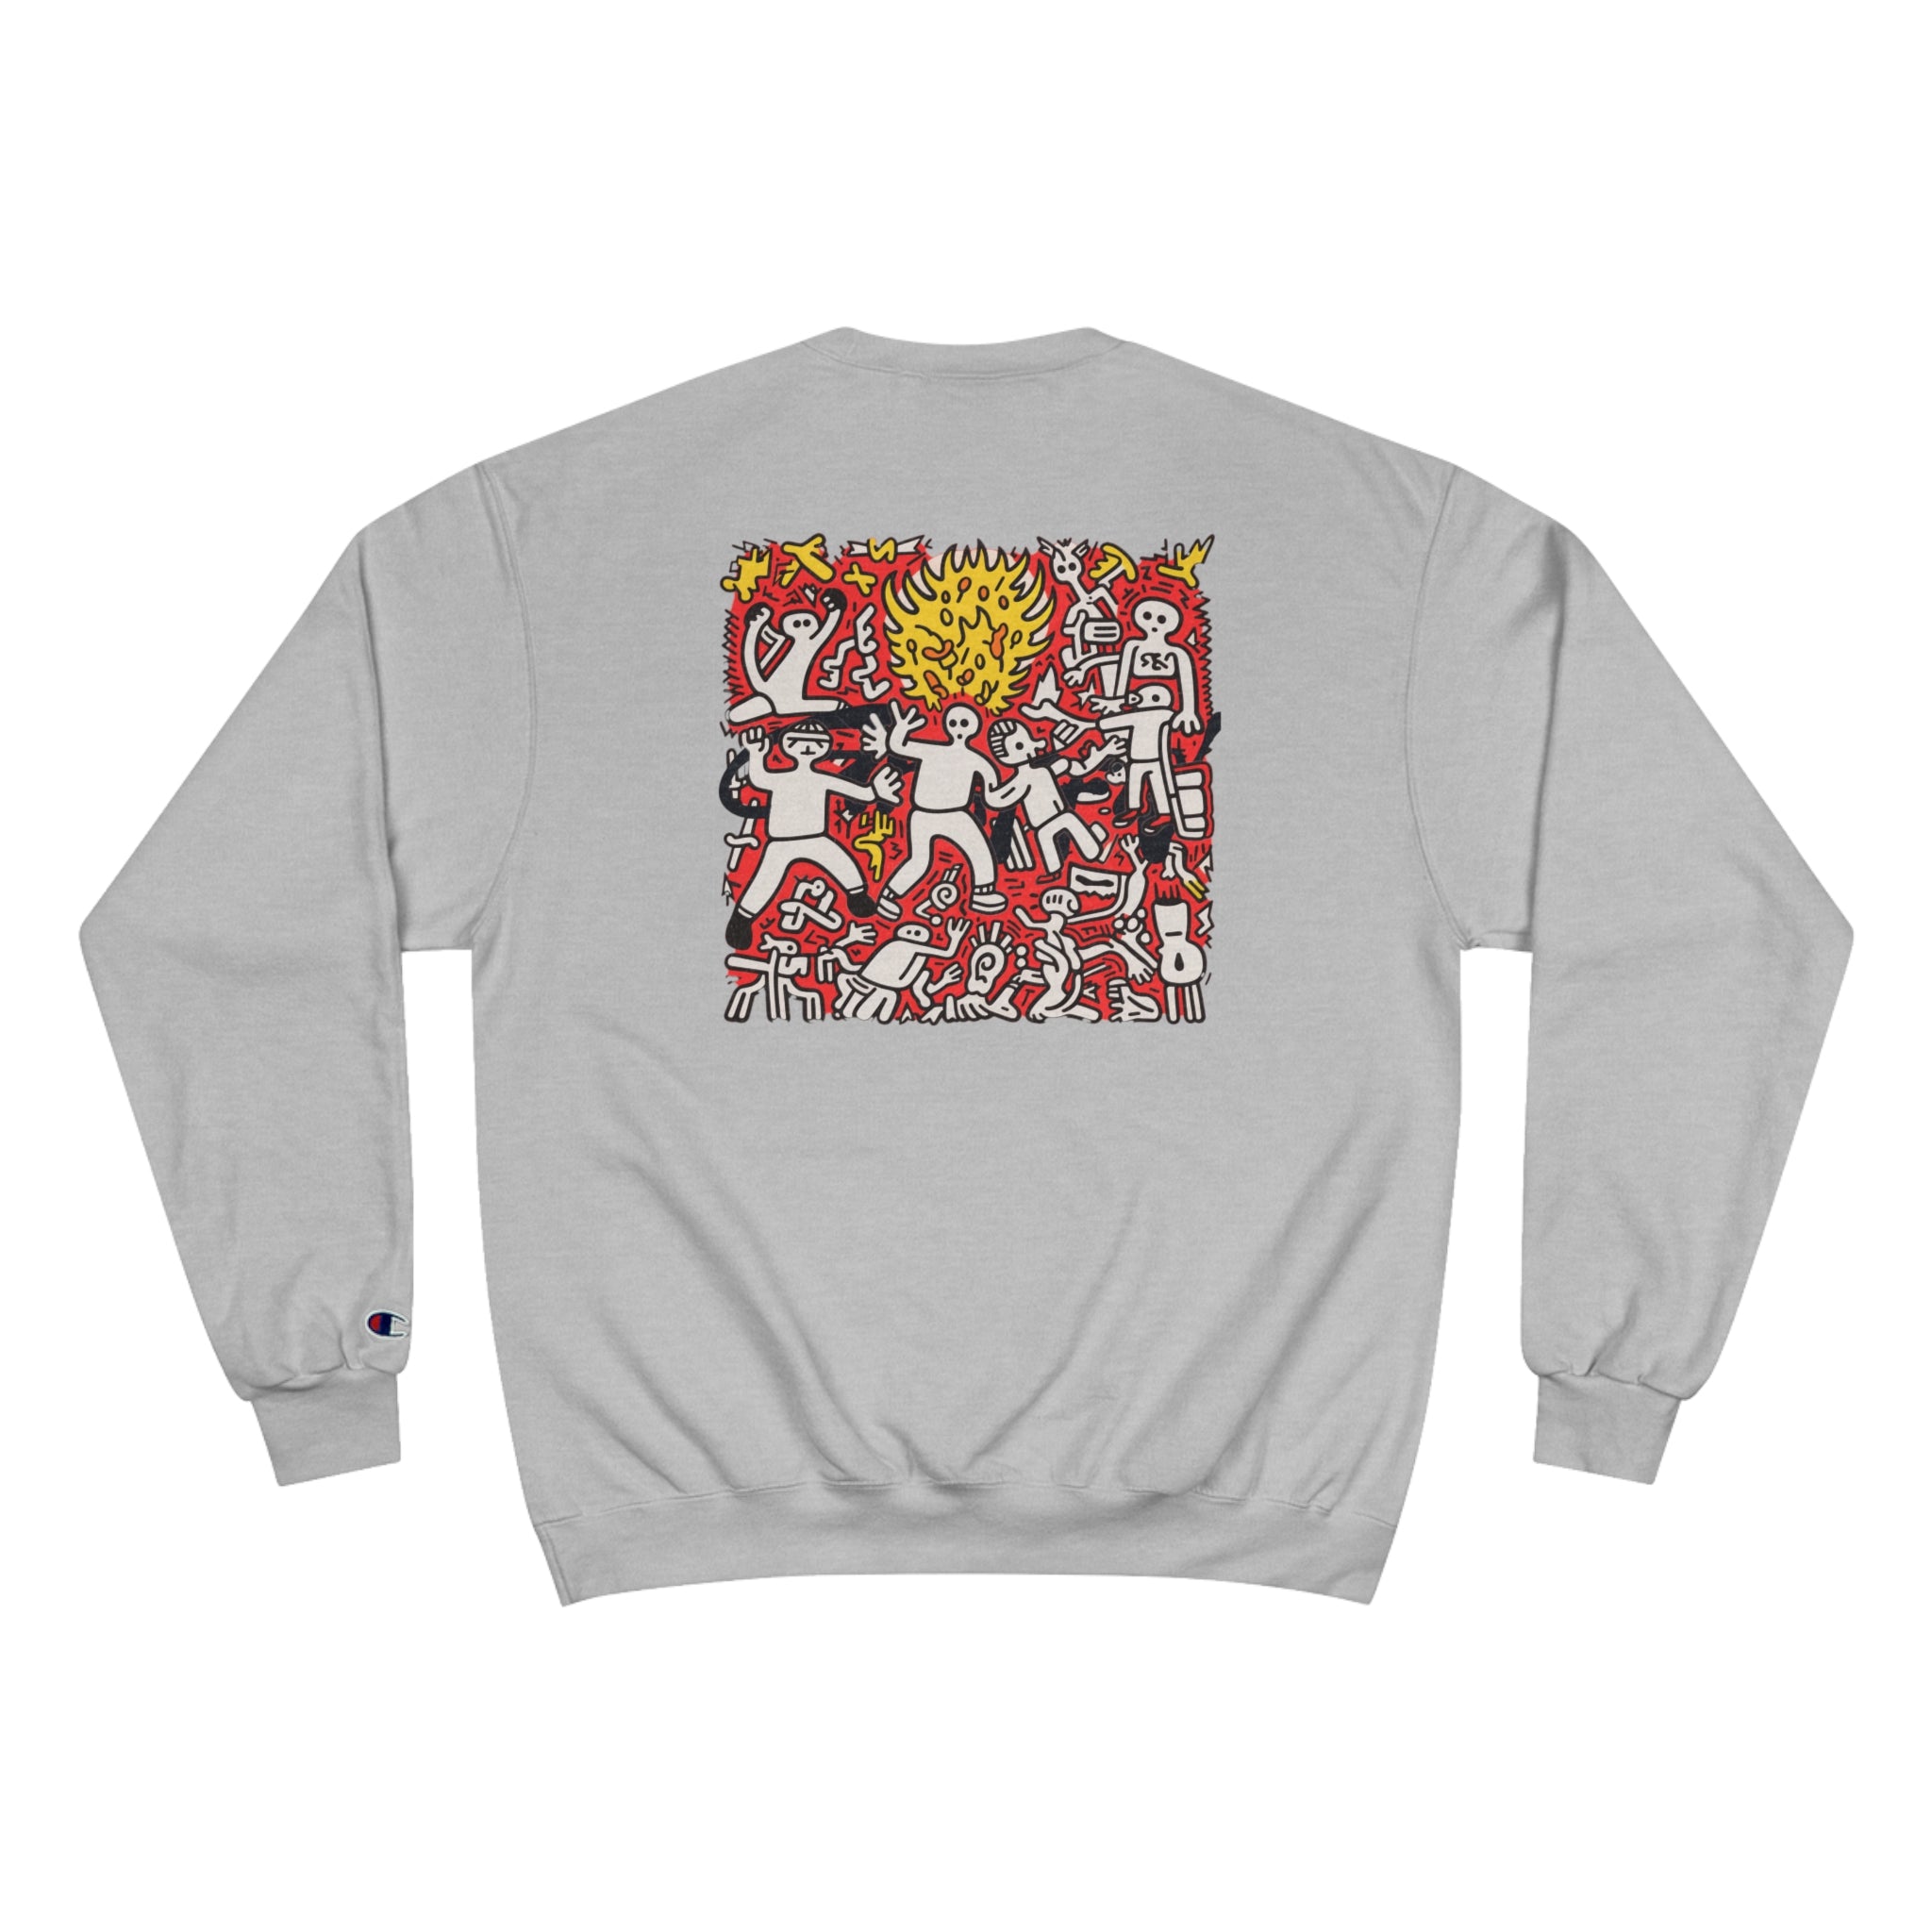 Urban Pulse: The vision of Peaceful Rebellion Sweatshirt